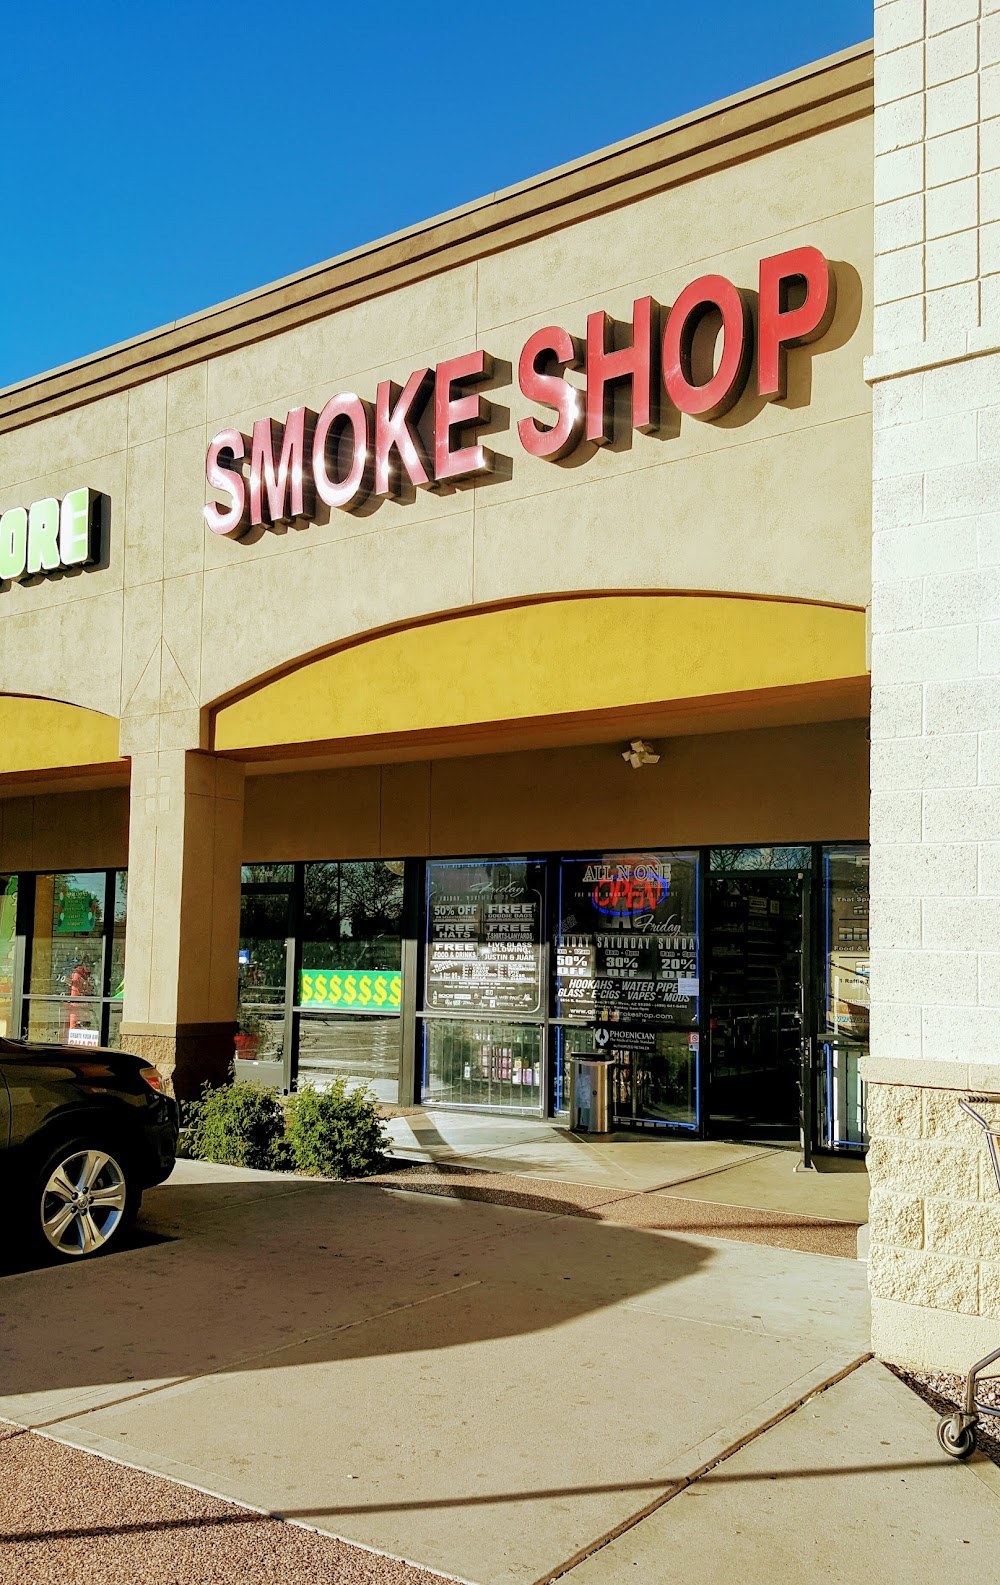 All N One Smoke Shop